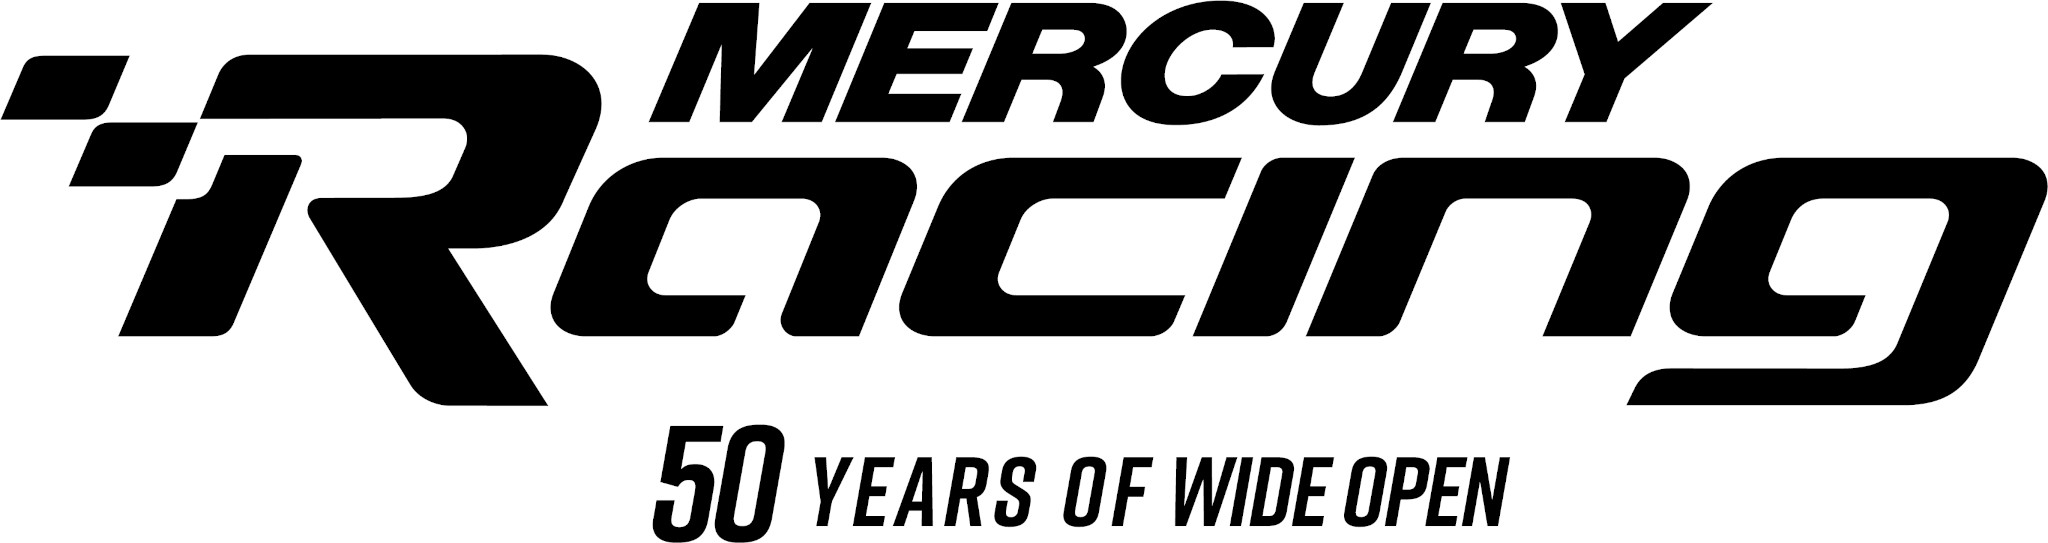 Mercury Racing 50 Years logo